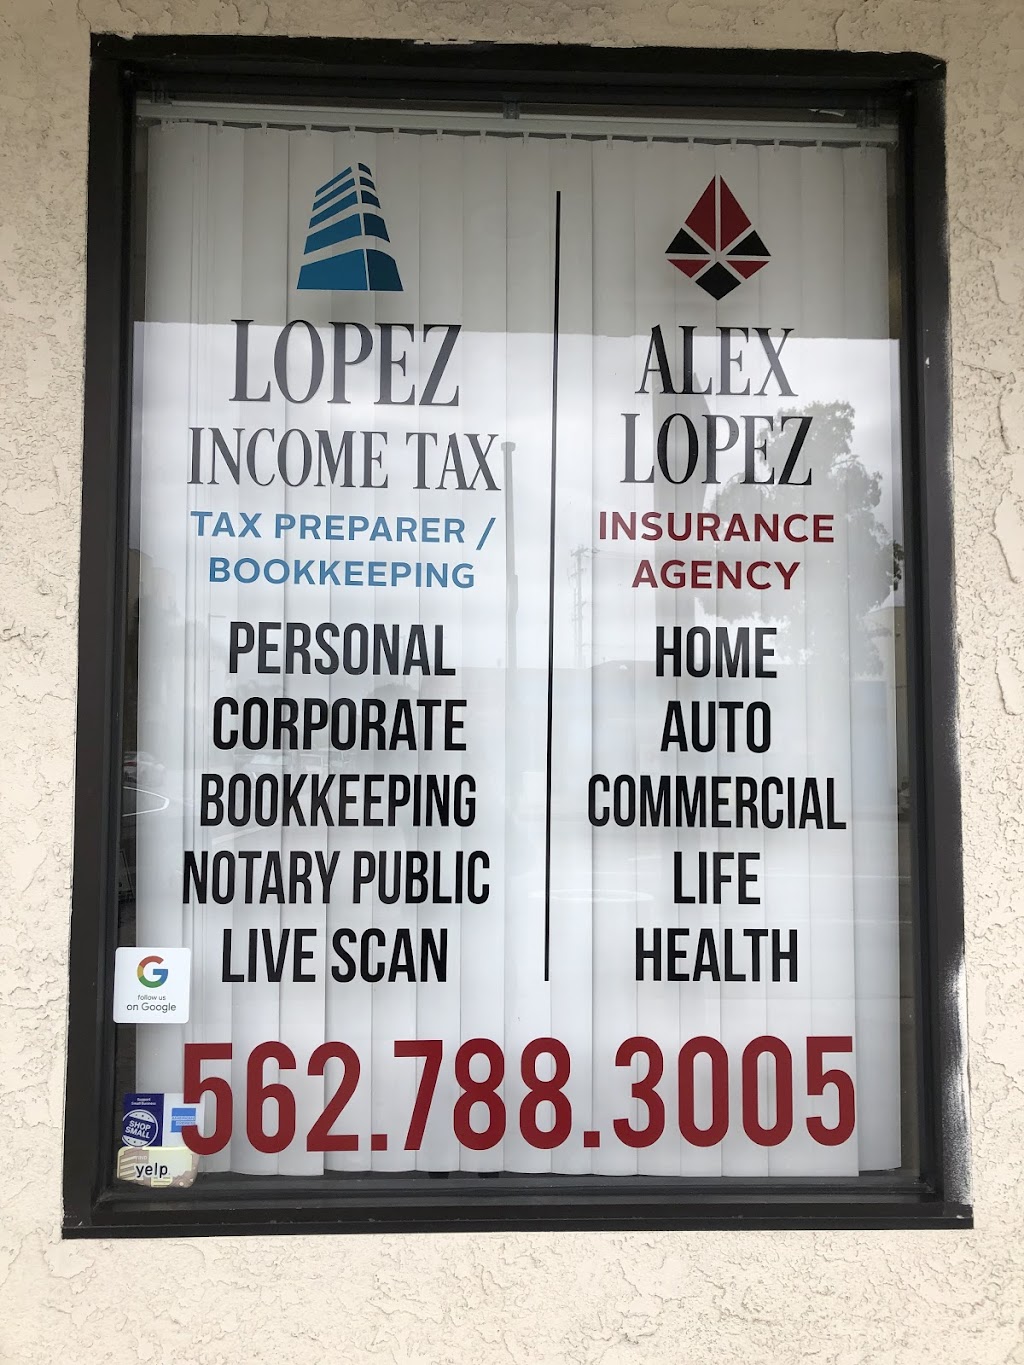 Alex Lopez Insurance Agency | 12127 Garfield Ave, South Gate, CA 90280, USA | Phone: (562) 788-3005